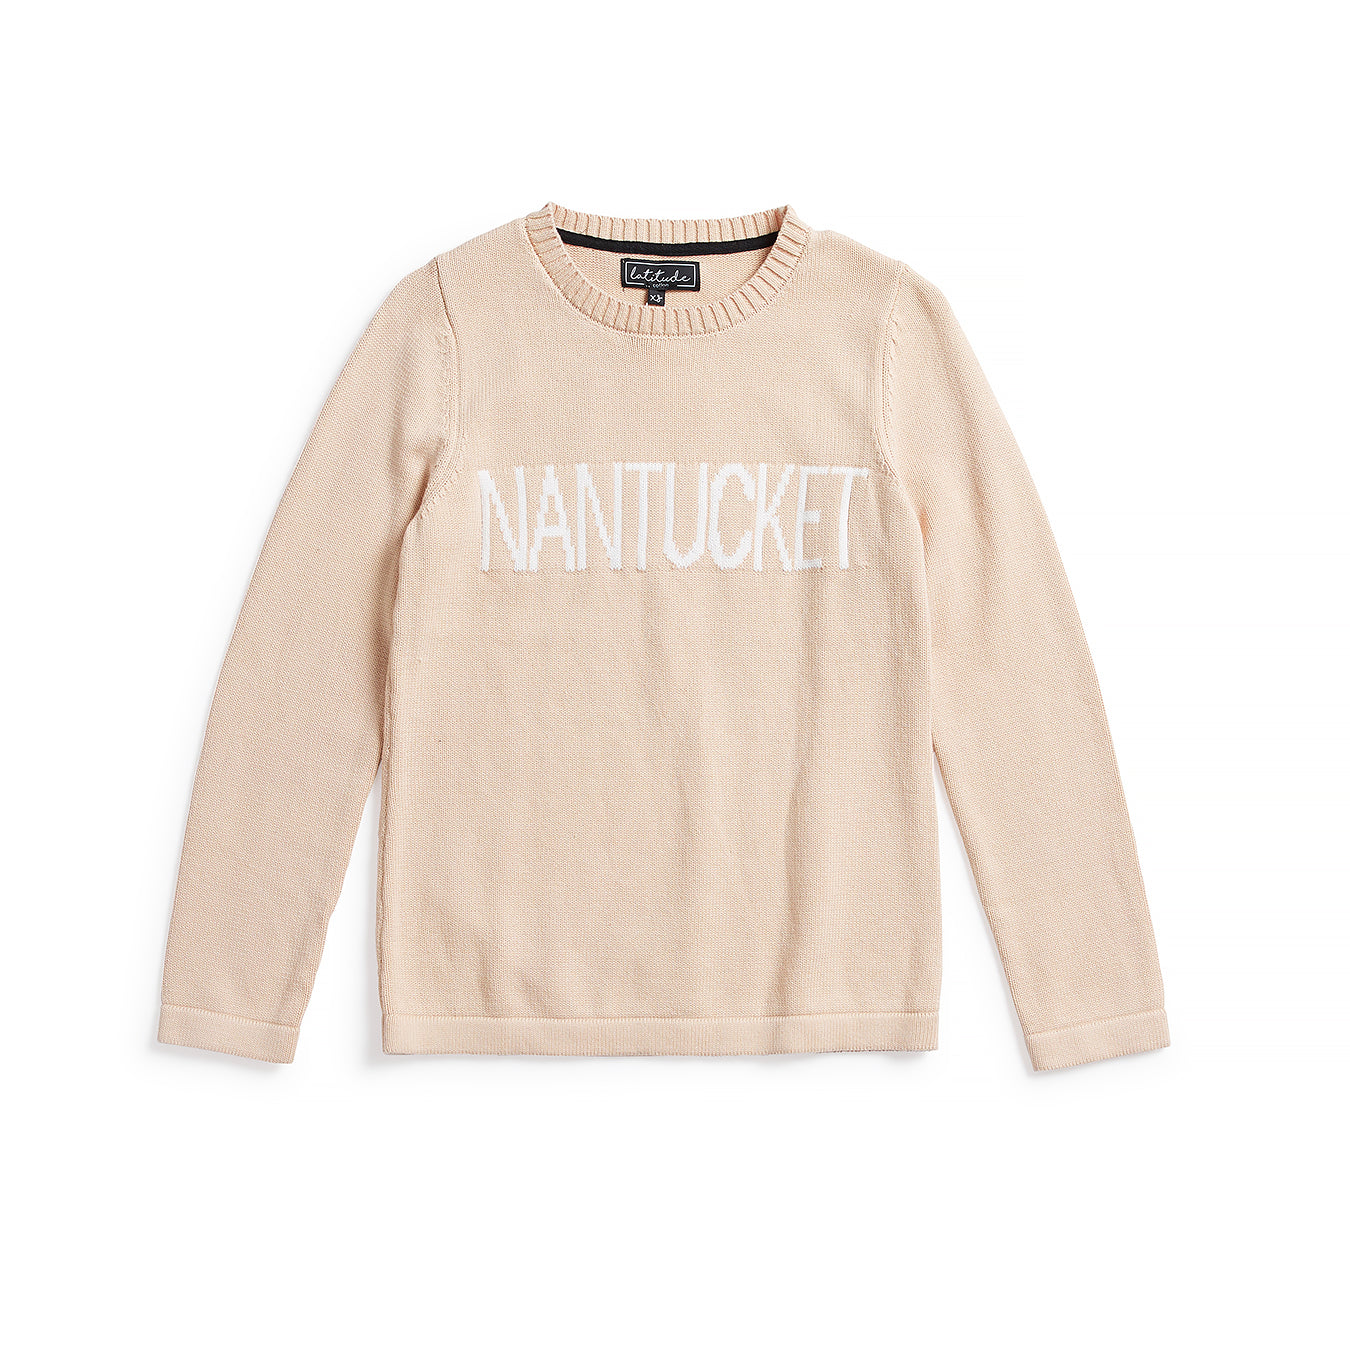 Latitude Clothing Nantucket Sweater Light Camel/White